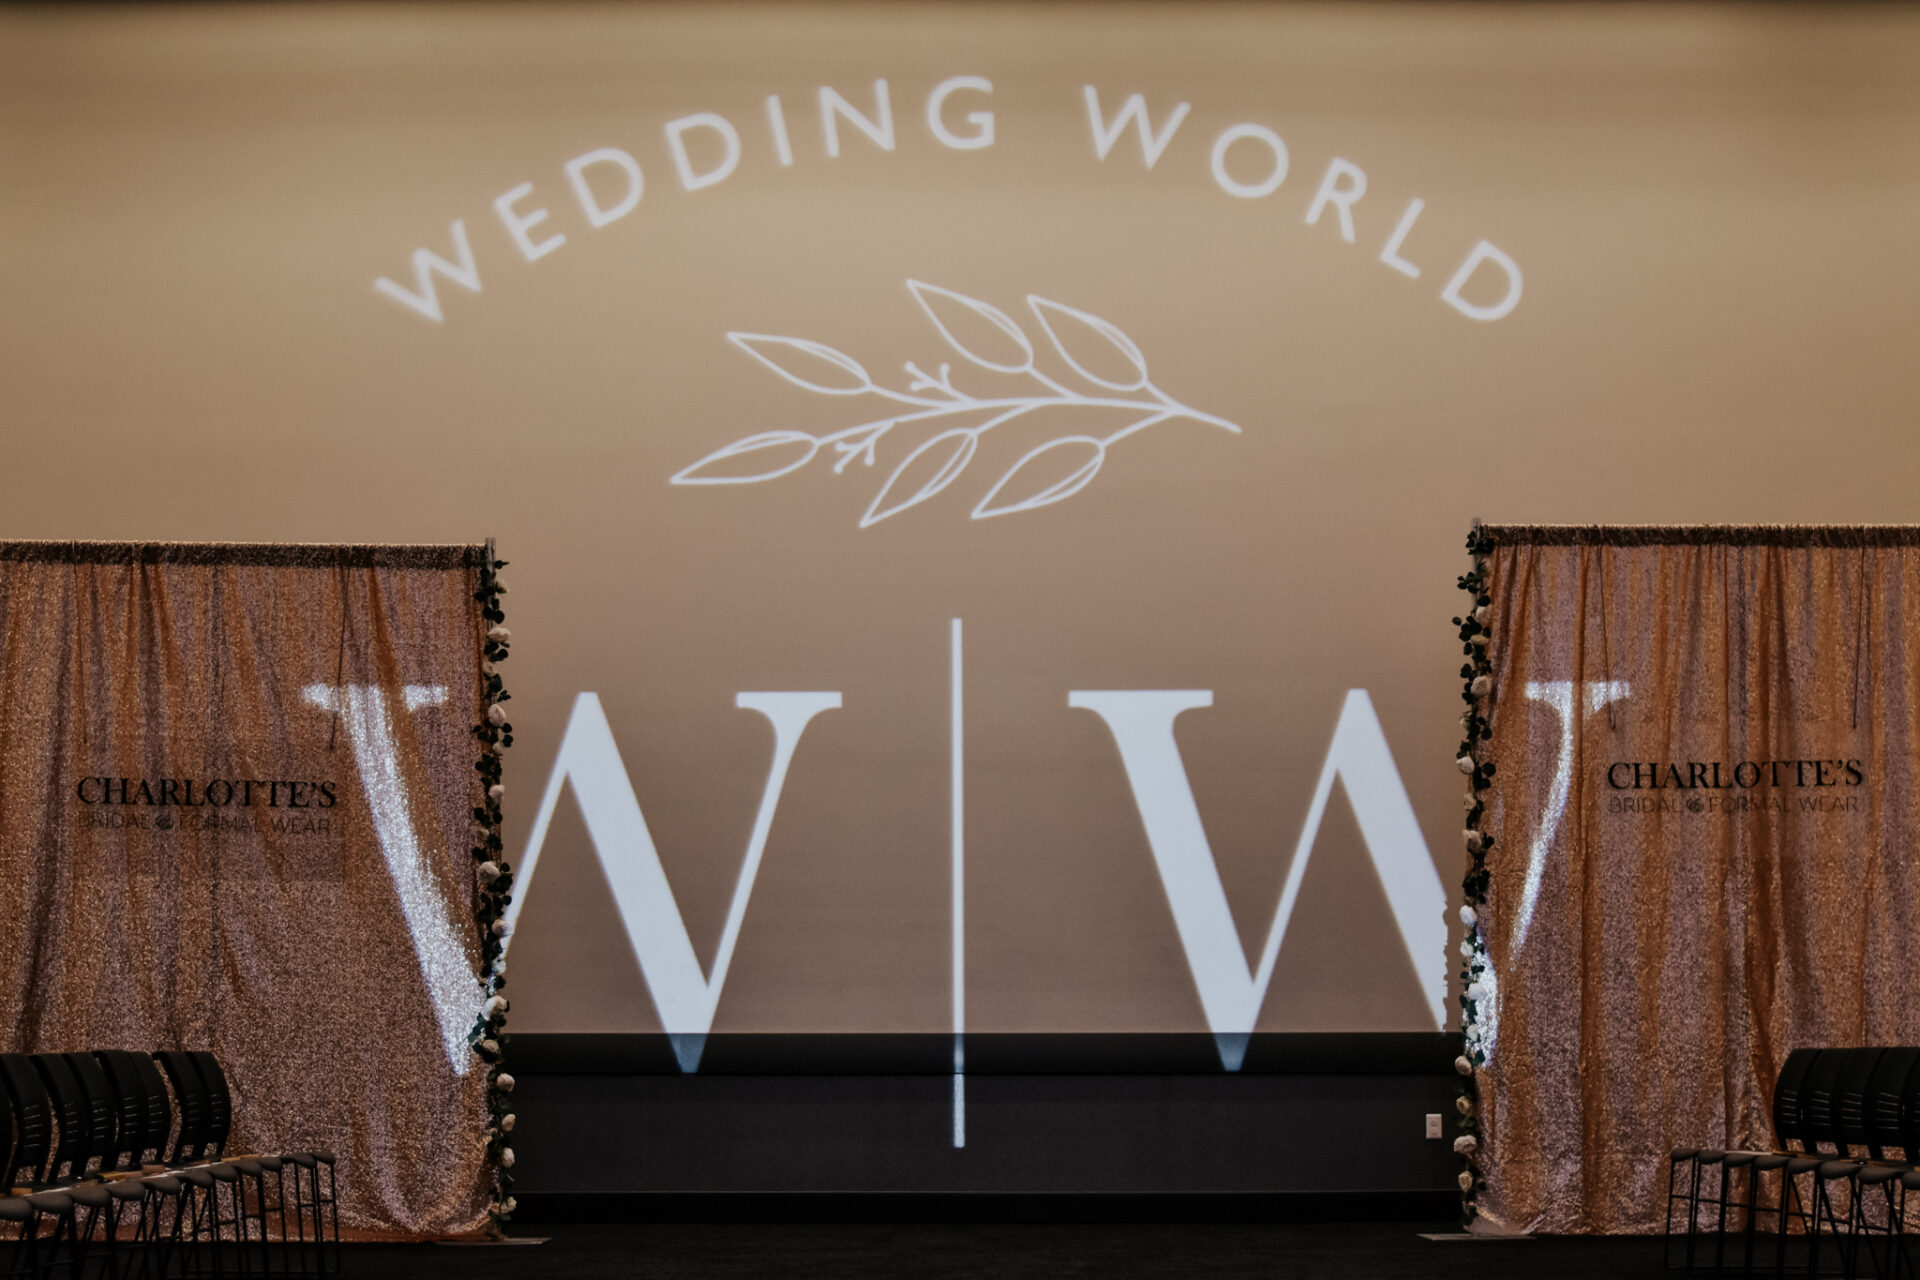 Wedding World logo is displayed on a window.